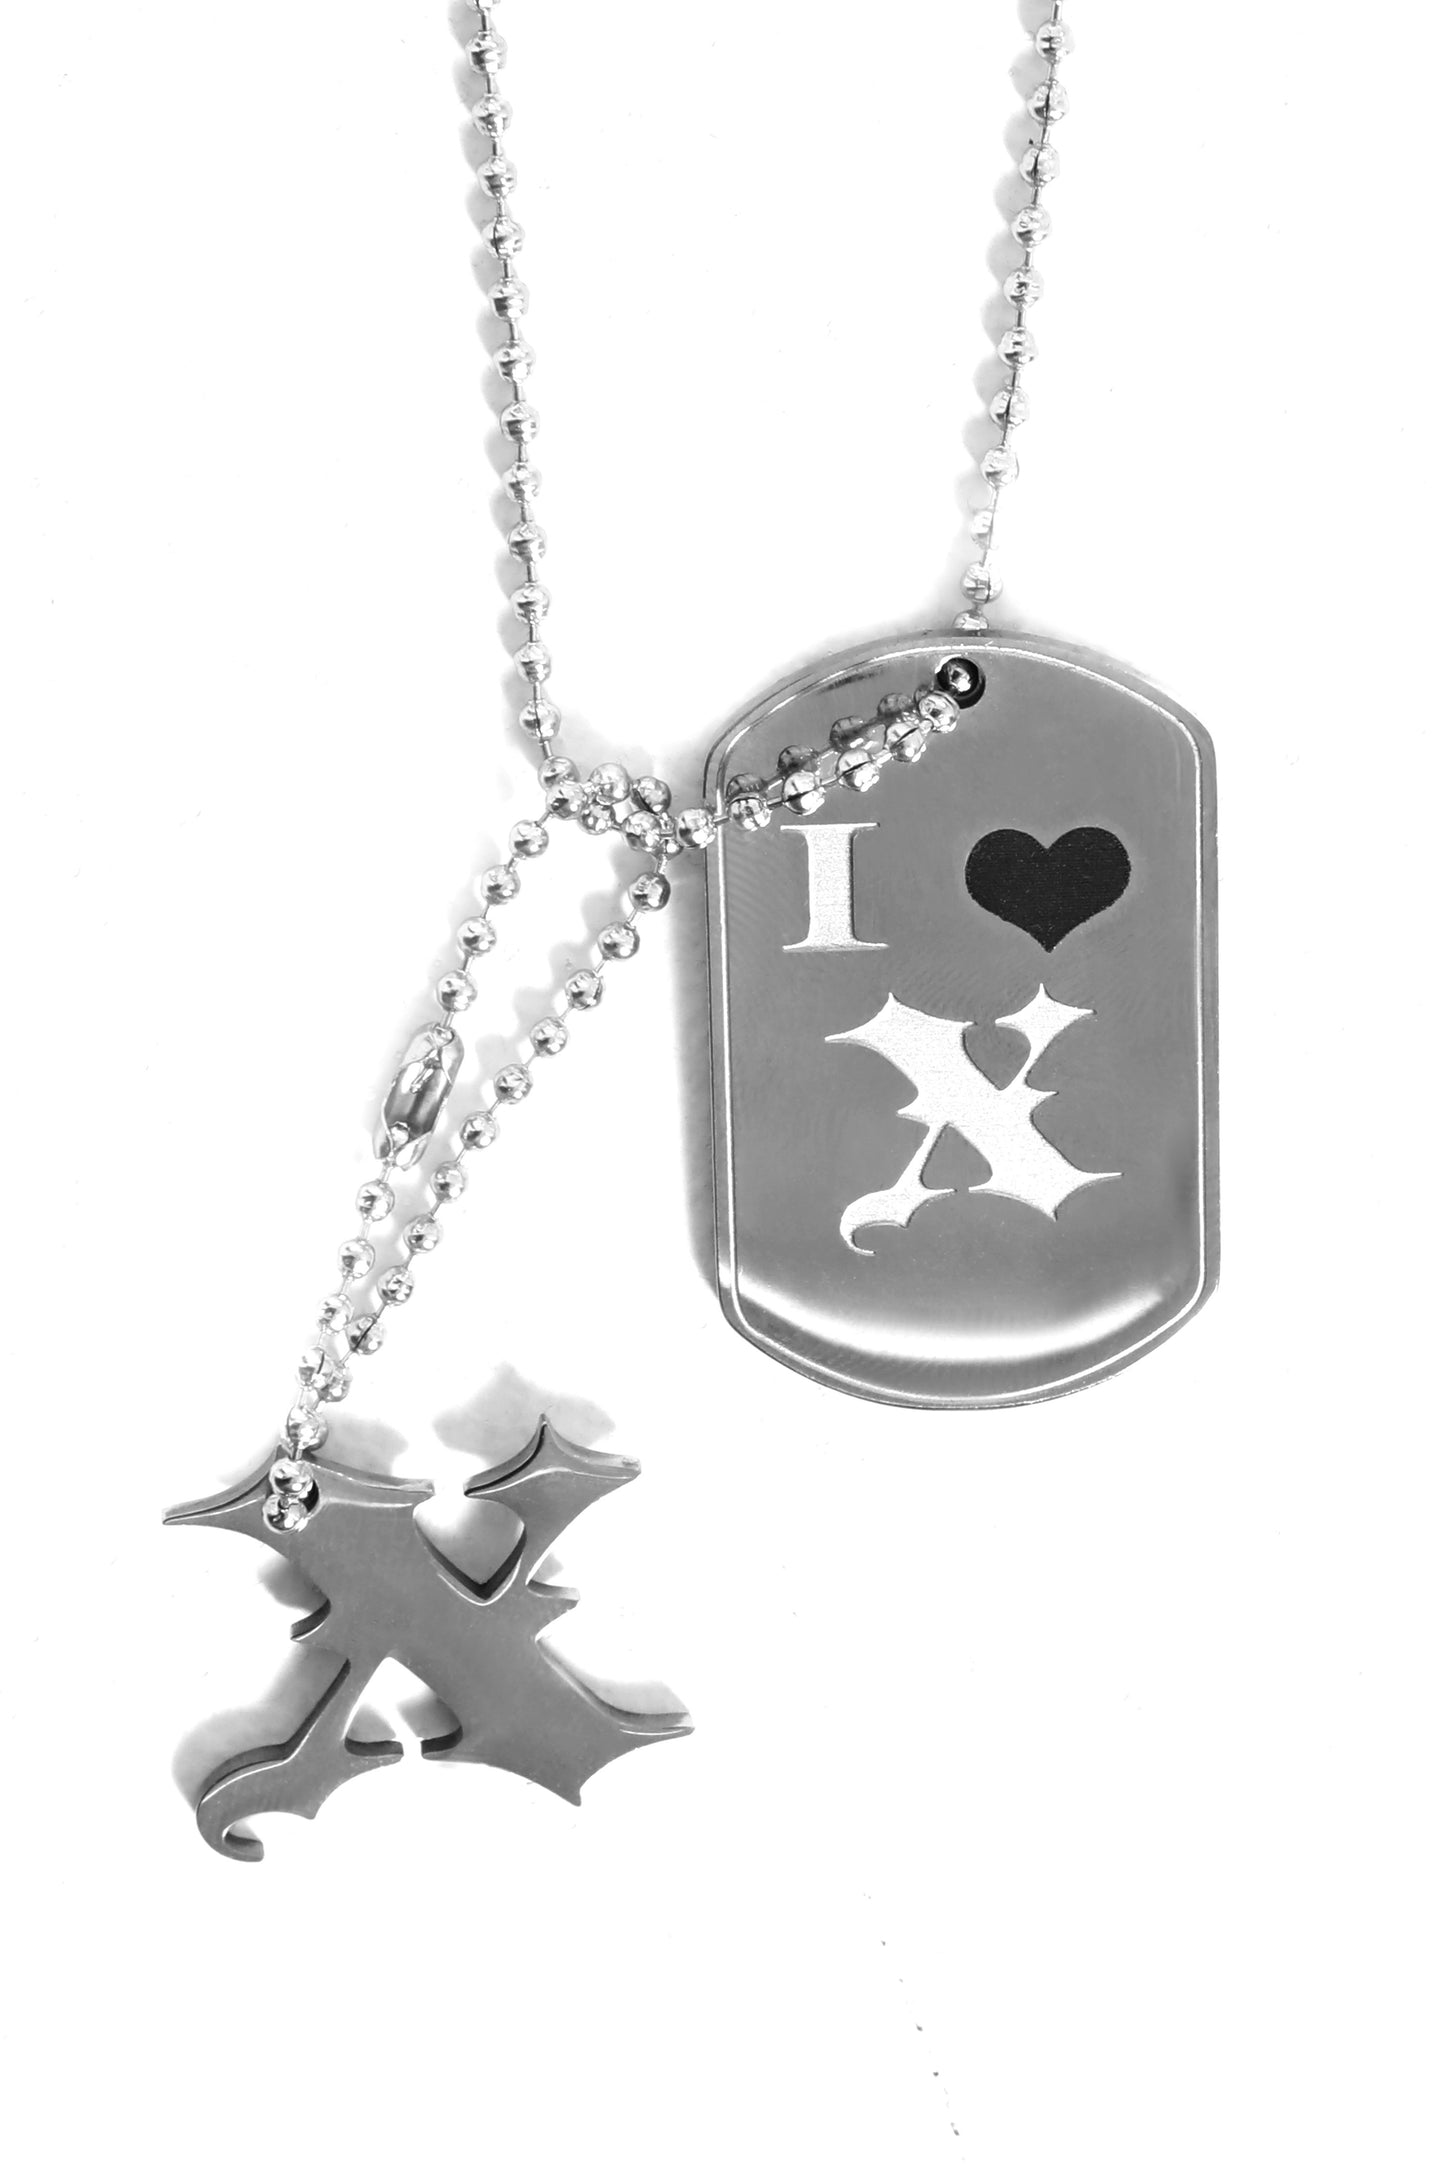 'i heart x' dog tag necklace